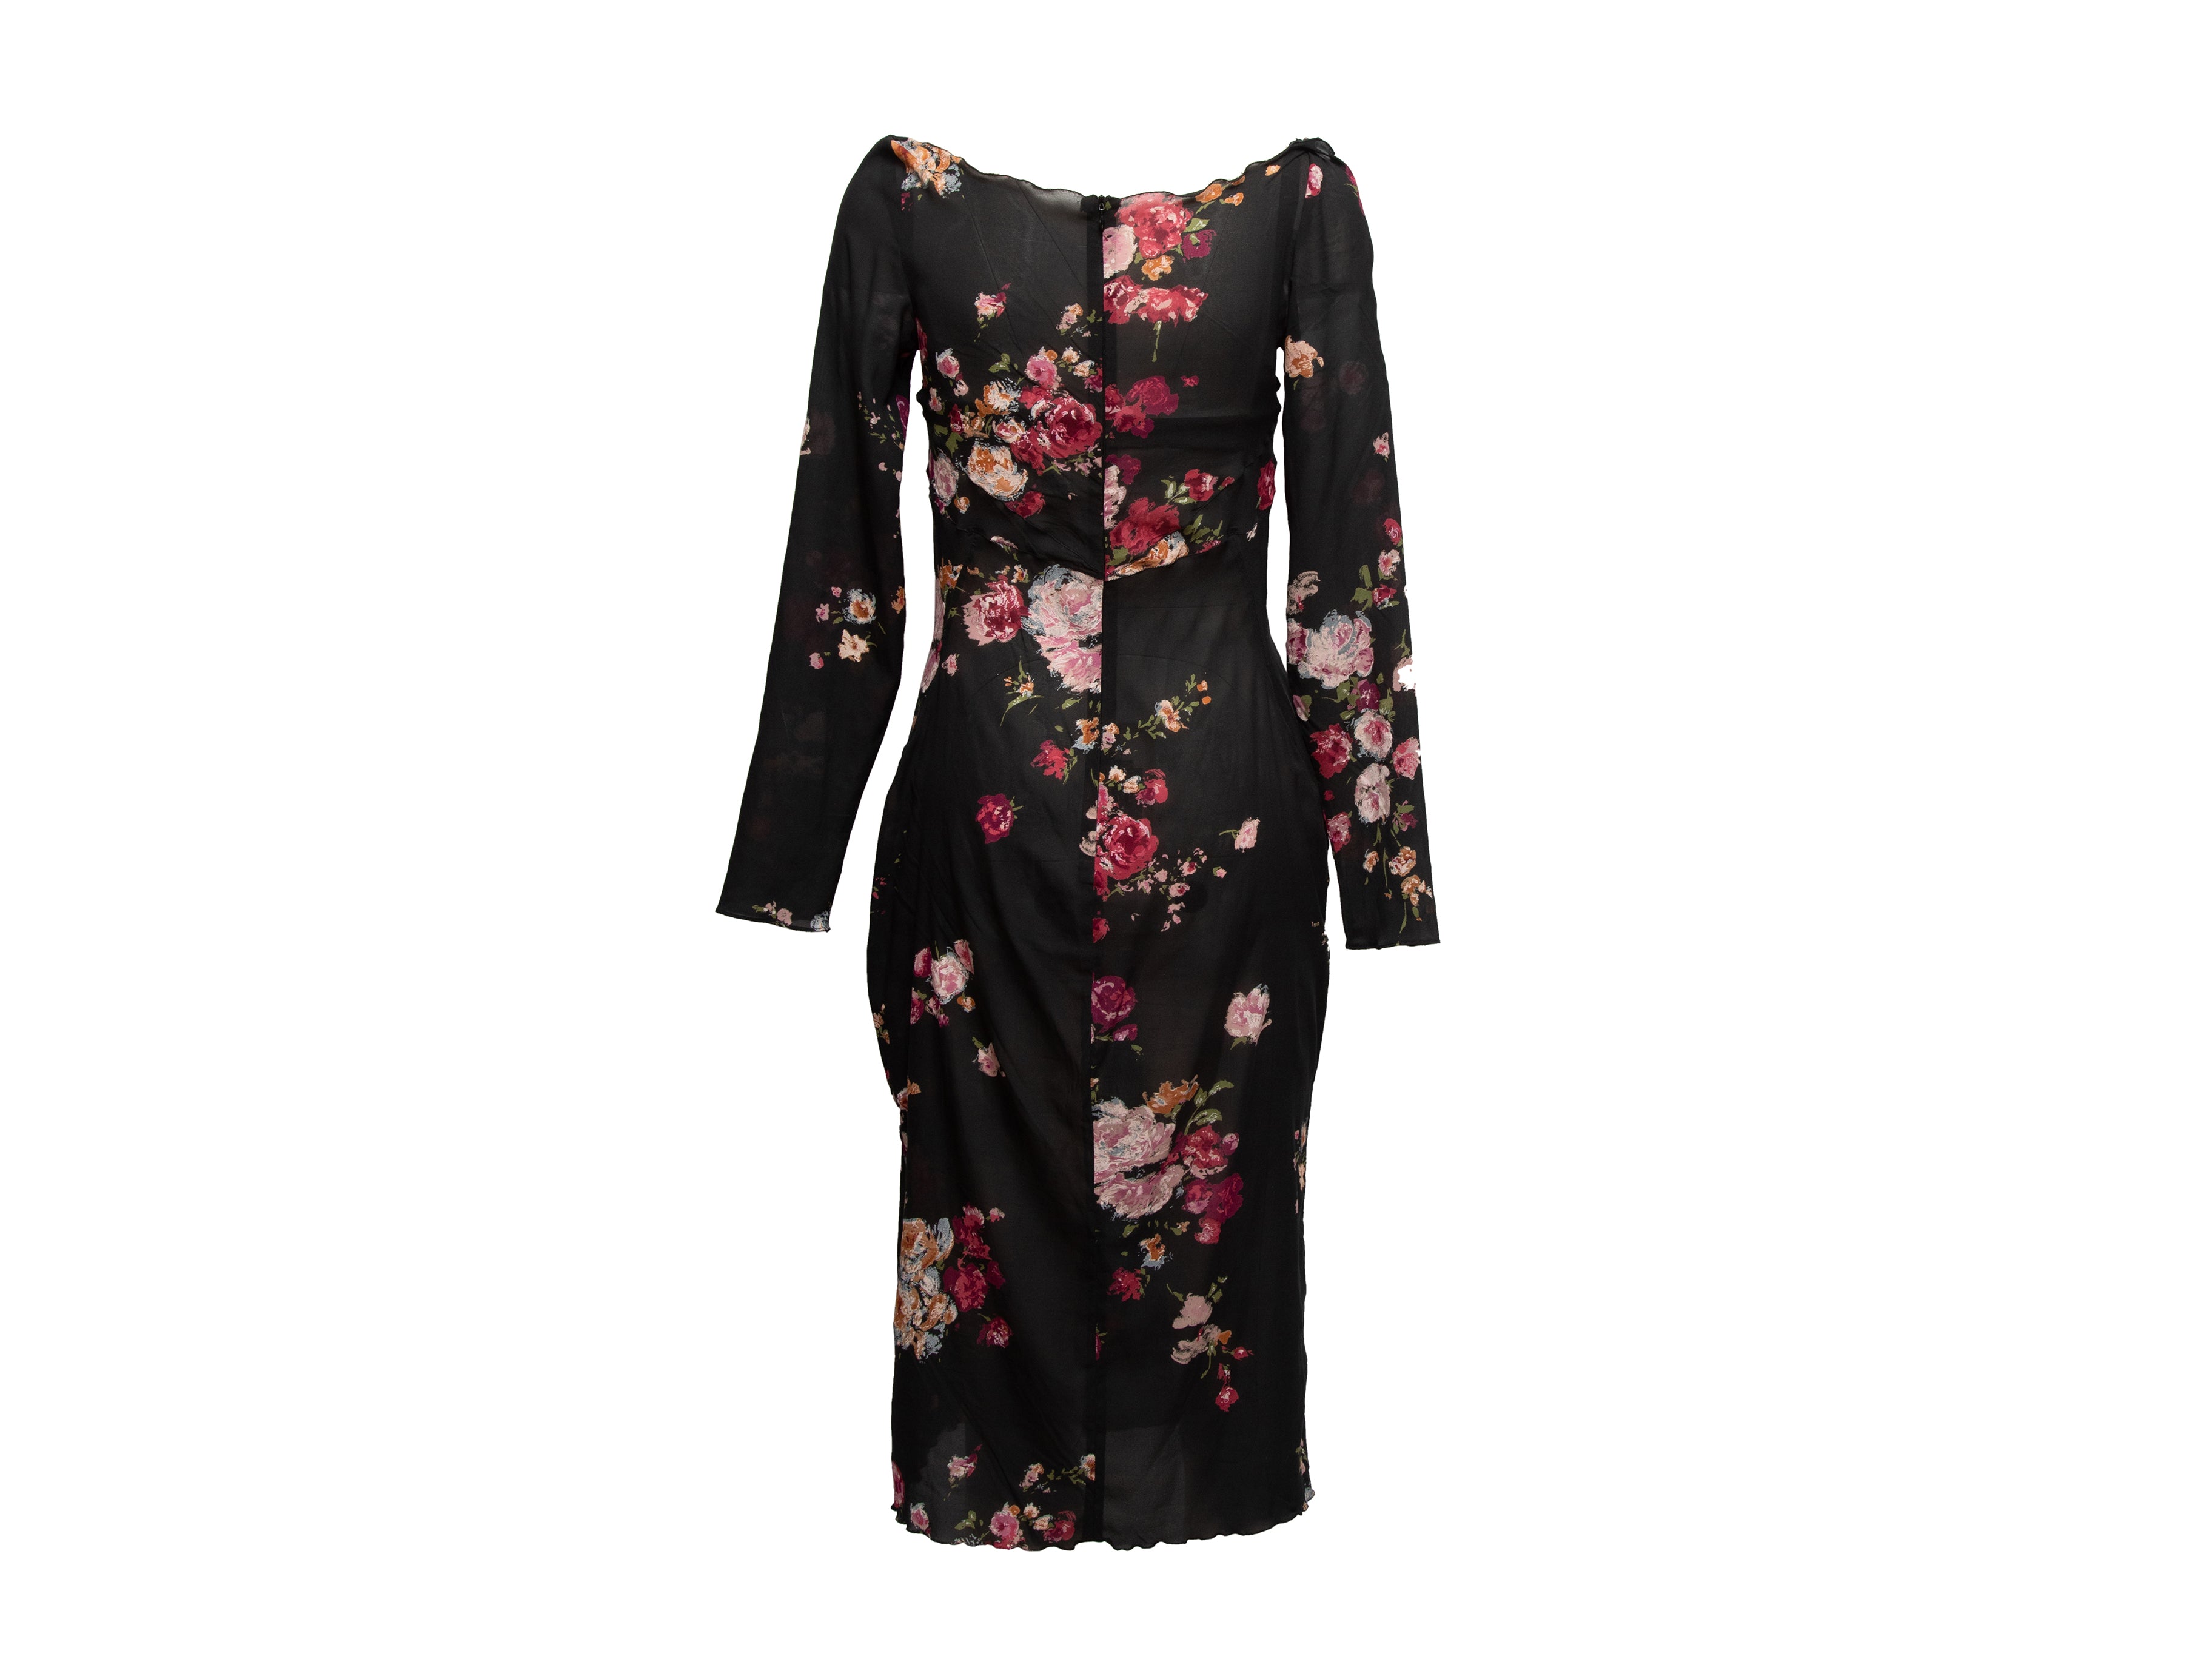 Black & Multicolor Dolce & Gabbana Floral Print Dress Size EU 44